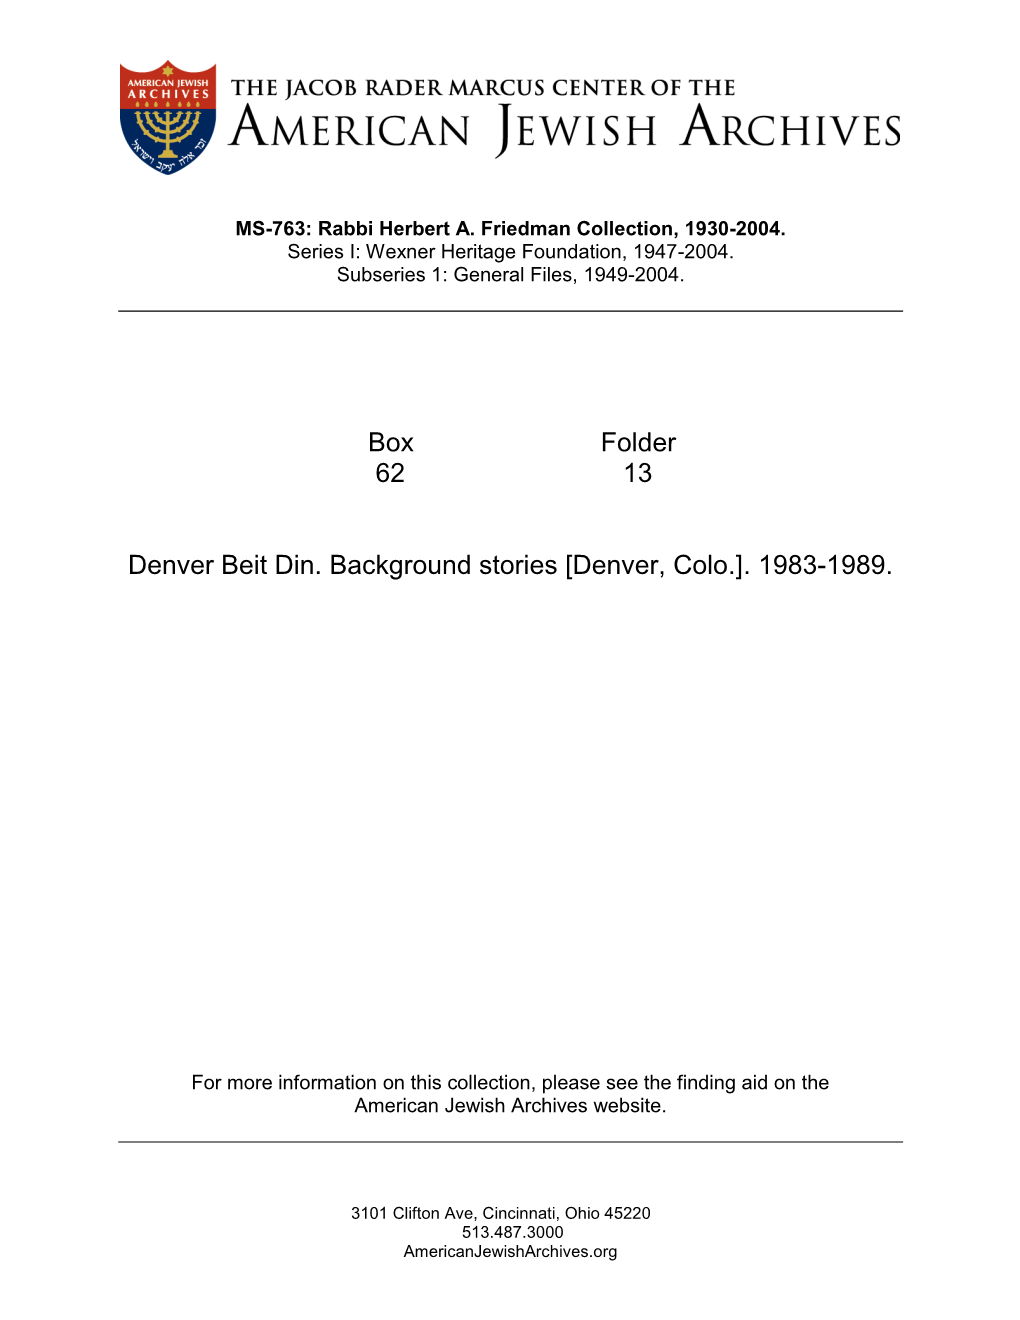 Box Folder 62 13 Denver Beit Din. Background Stories